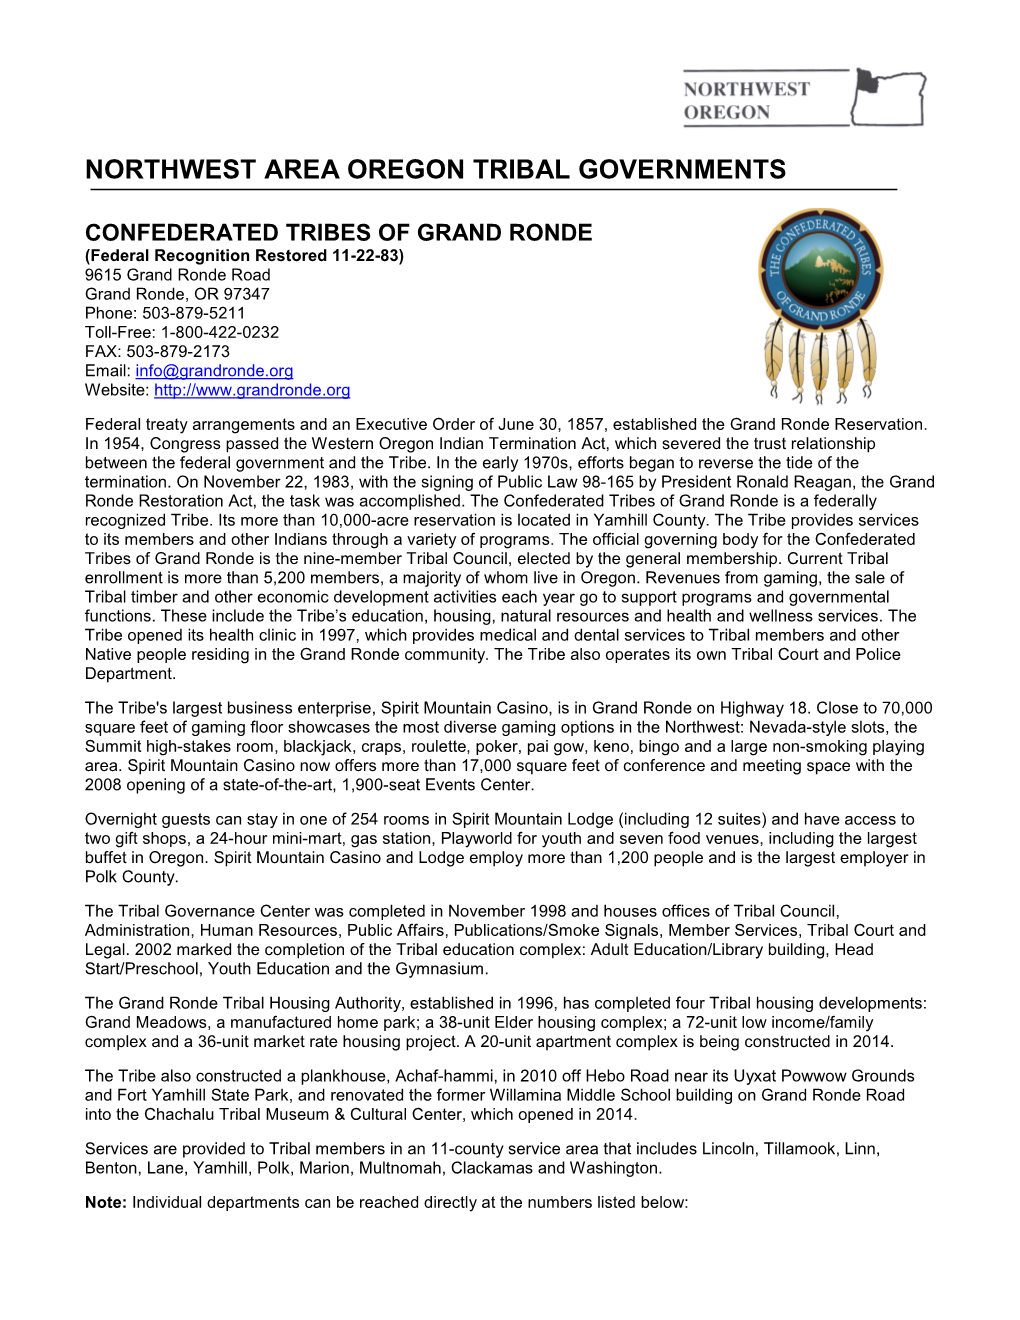 Northwest Area Oregon Tribal Governments